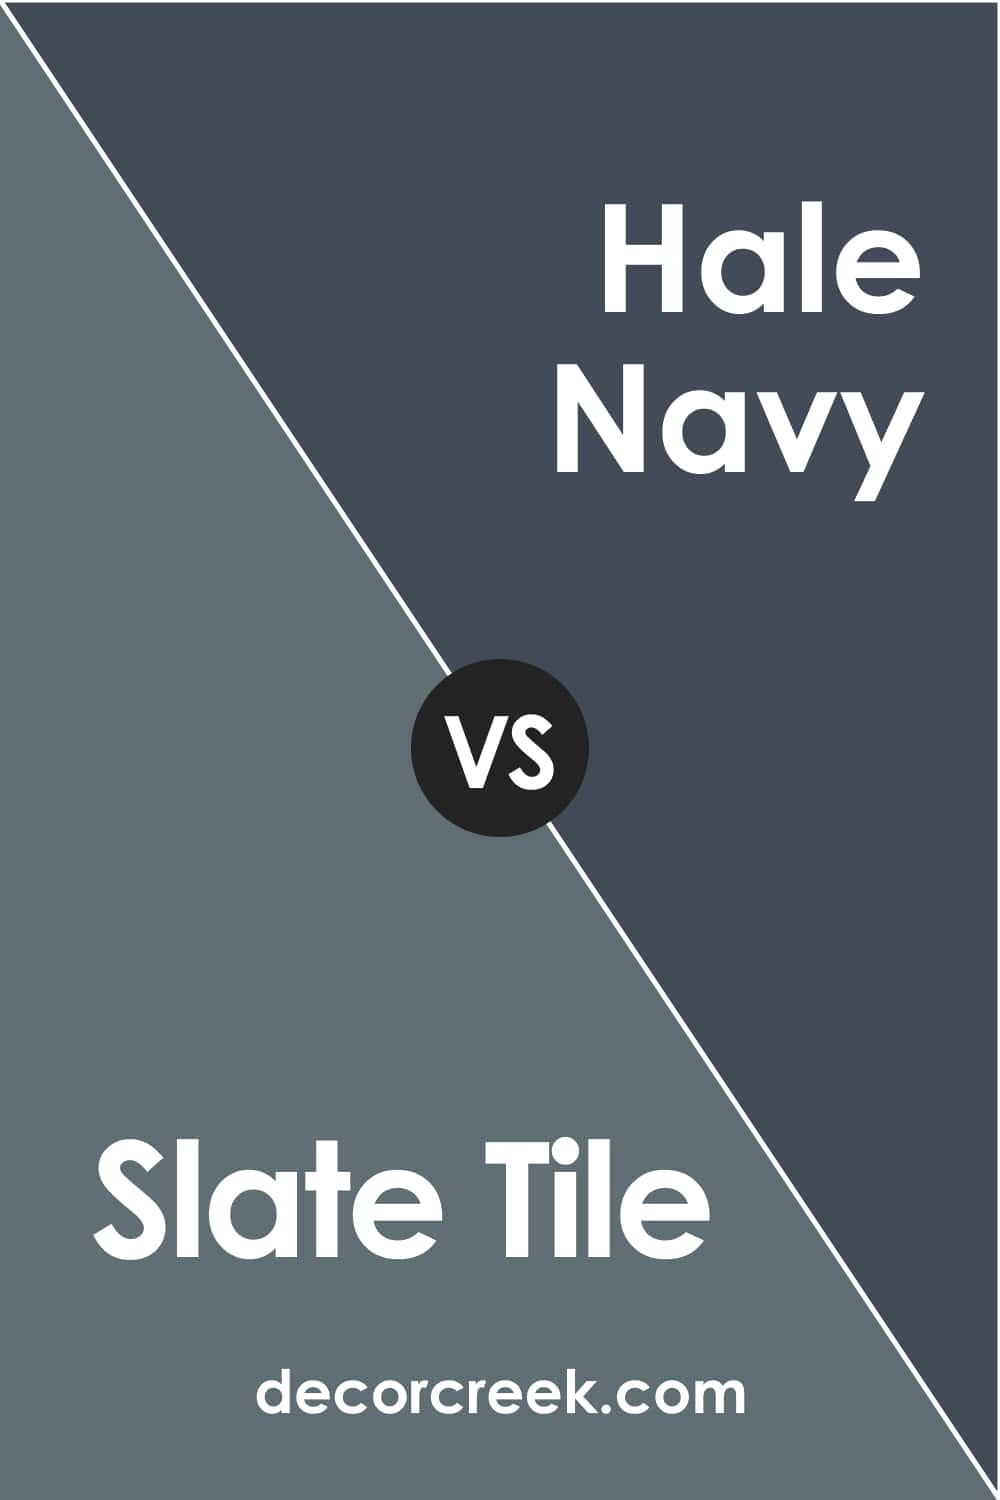 Slate Tile vs Hale Navy